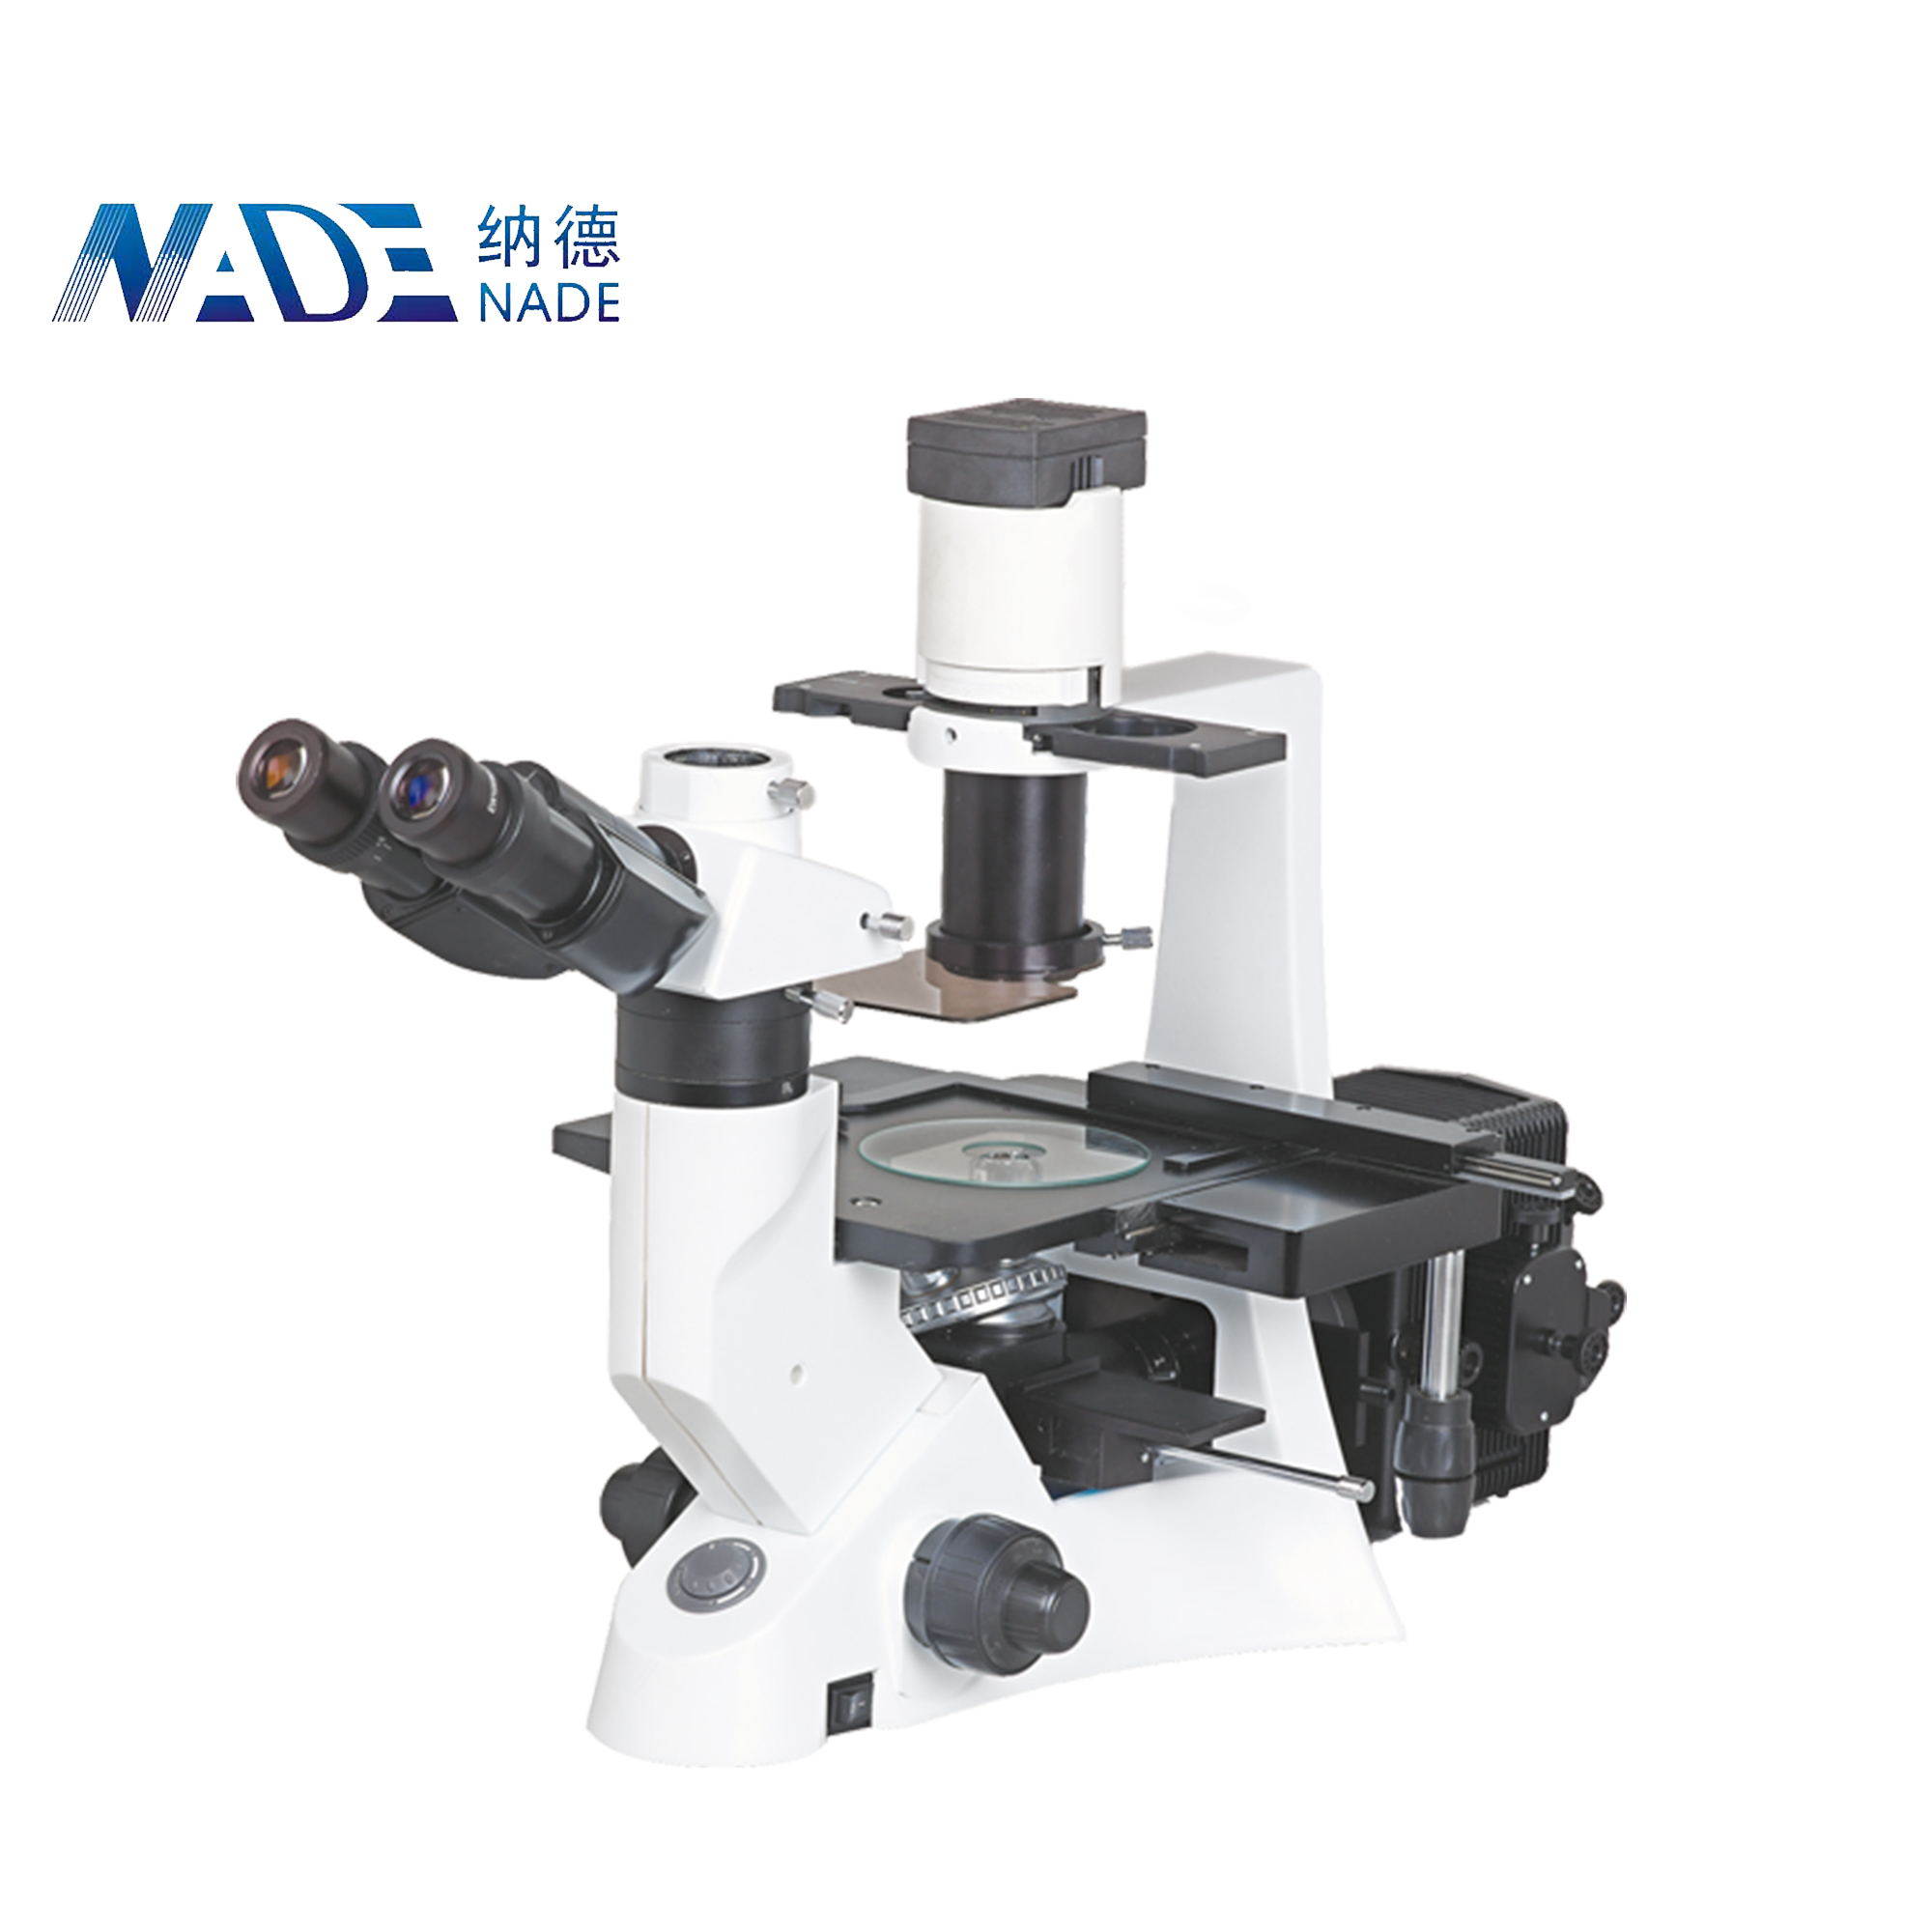 Nade Optical Instrument Inverted Fluorescent Biological Microscope NIB-100F